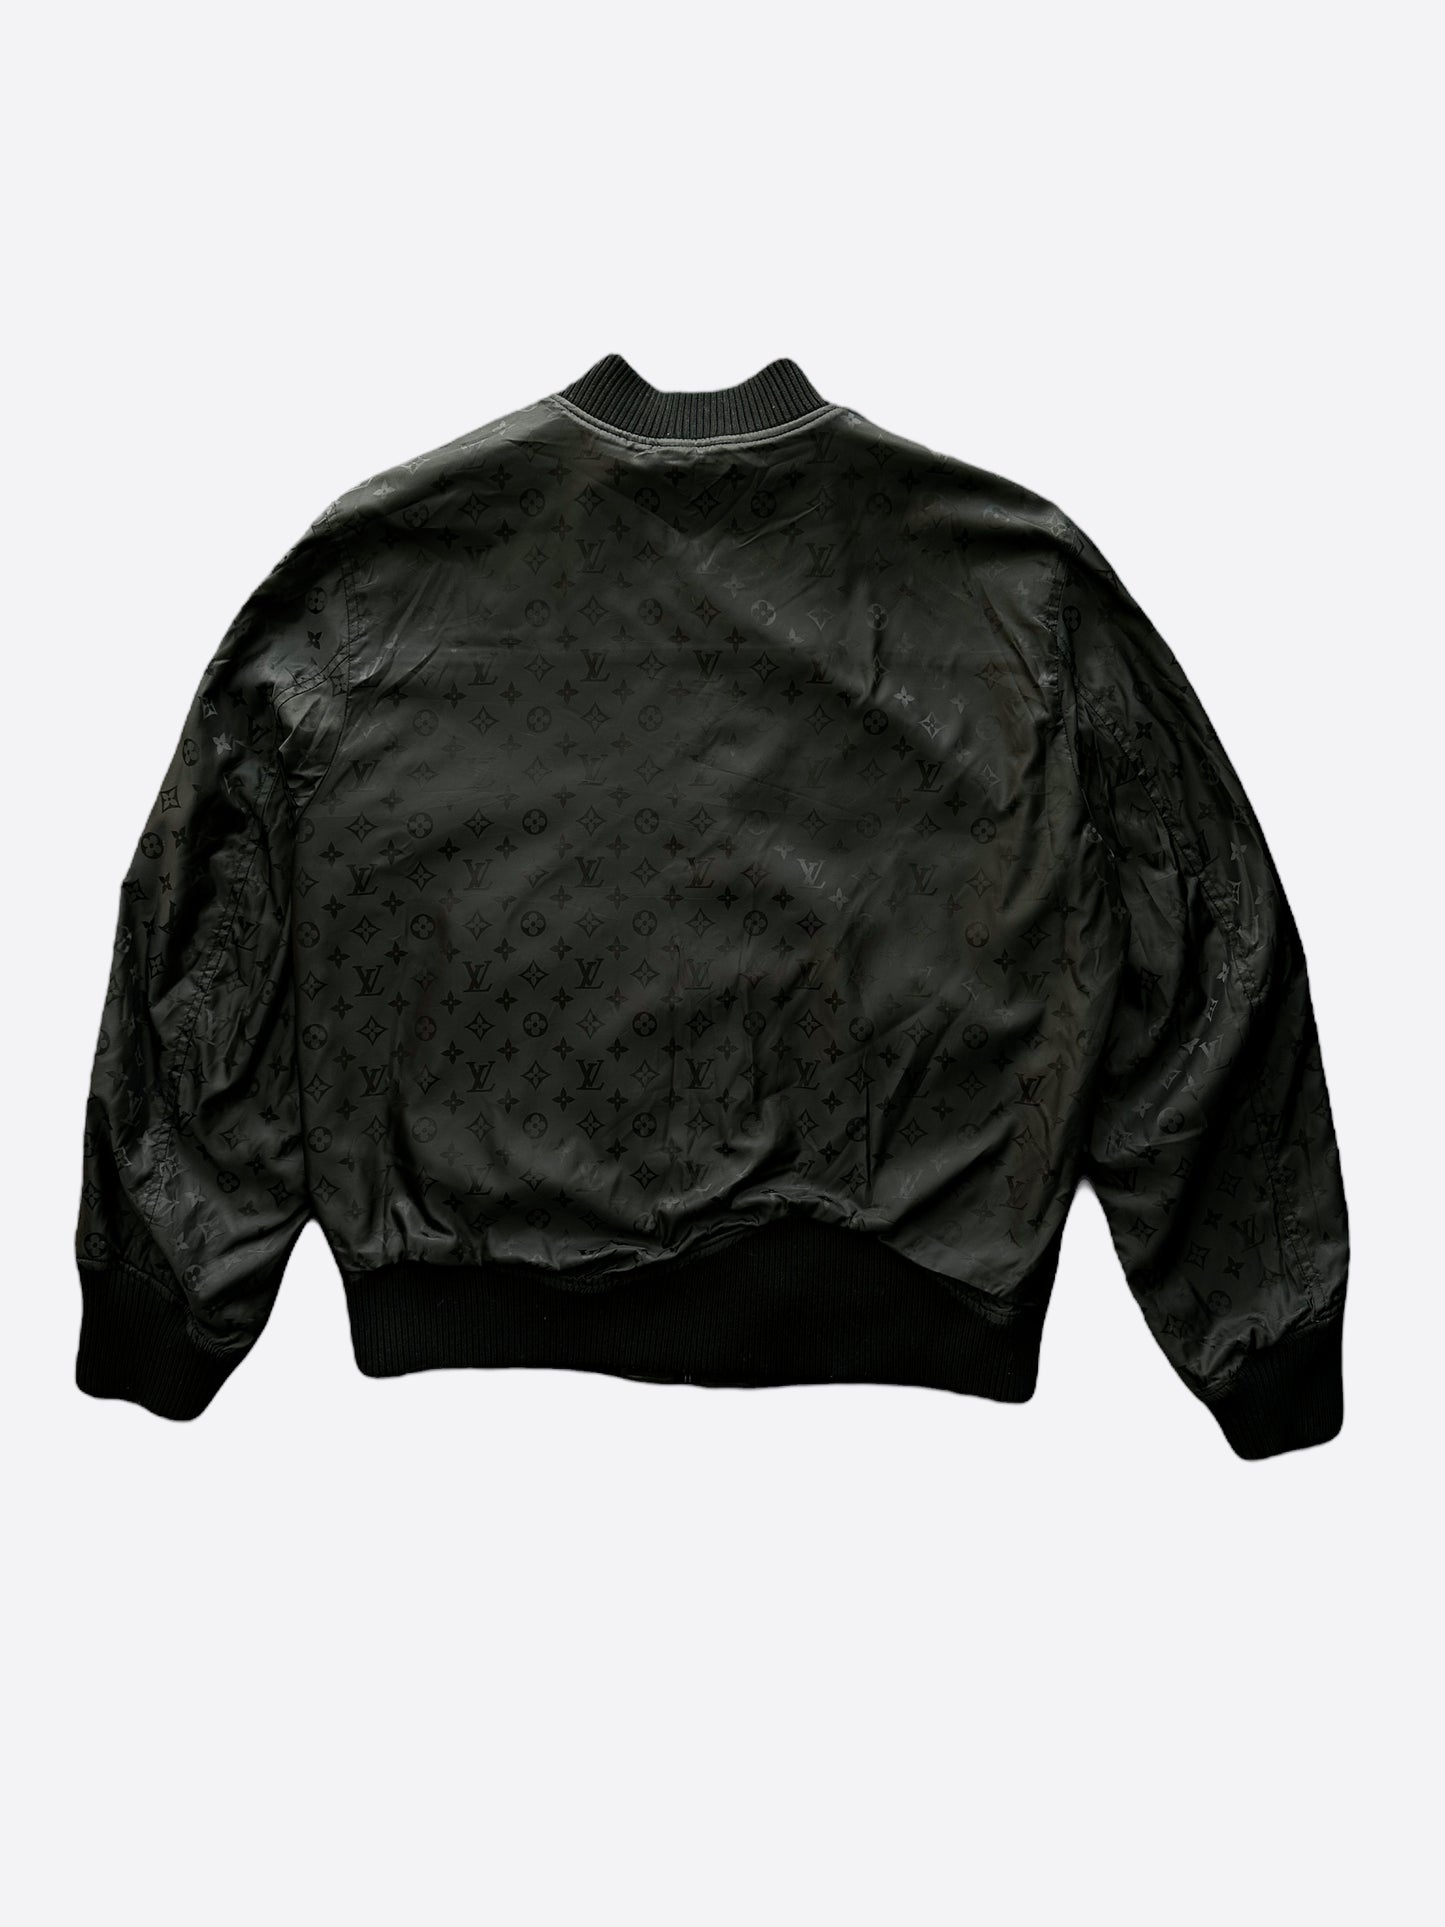 Louis Vuitton Black Leather & Nylon Reversible Bomb